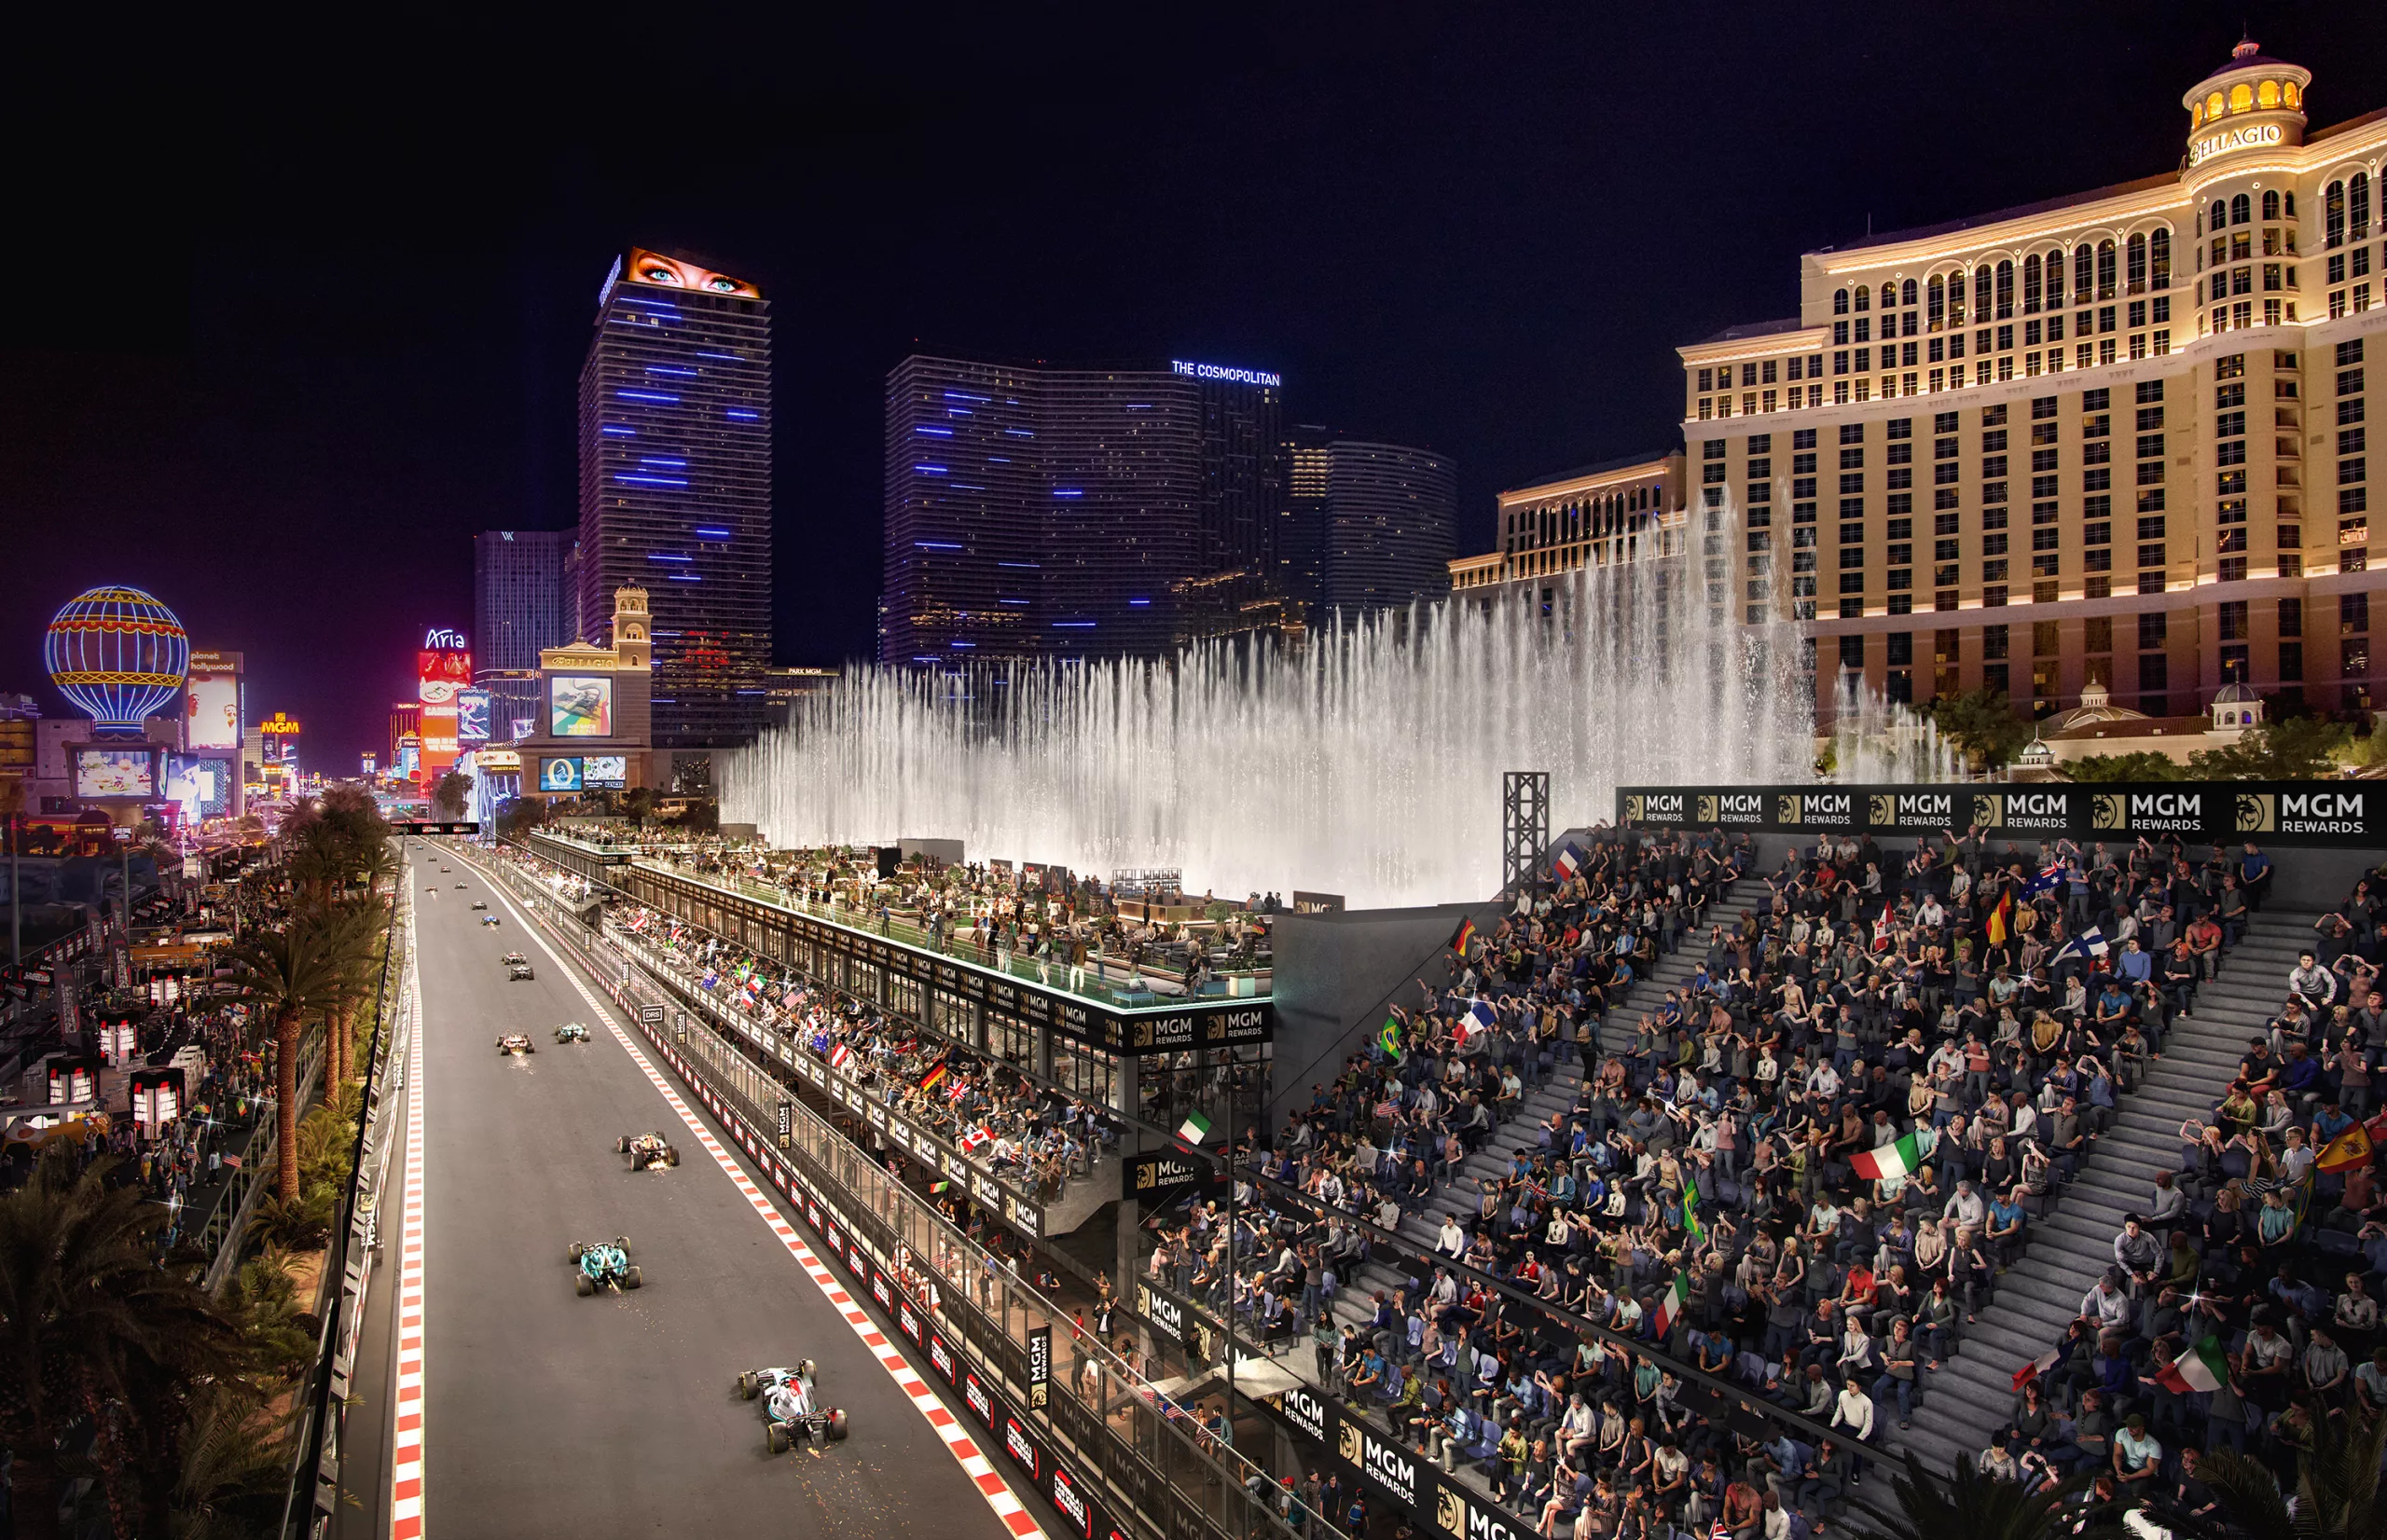 MGM Resorts International Launches Luxury Bellagio Fountain Club for F1